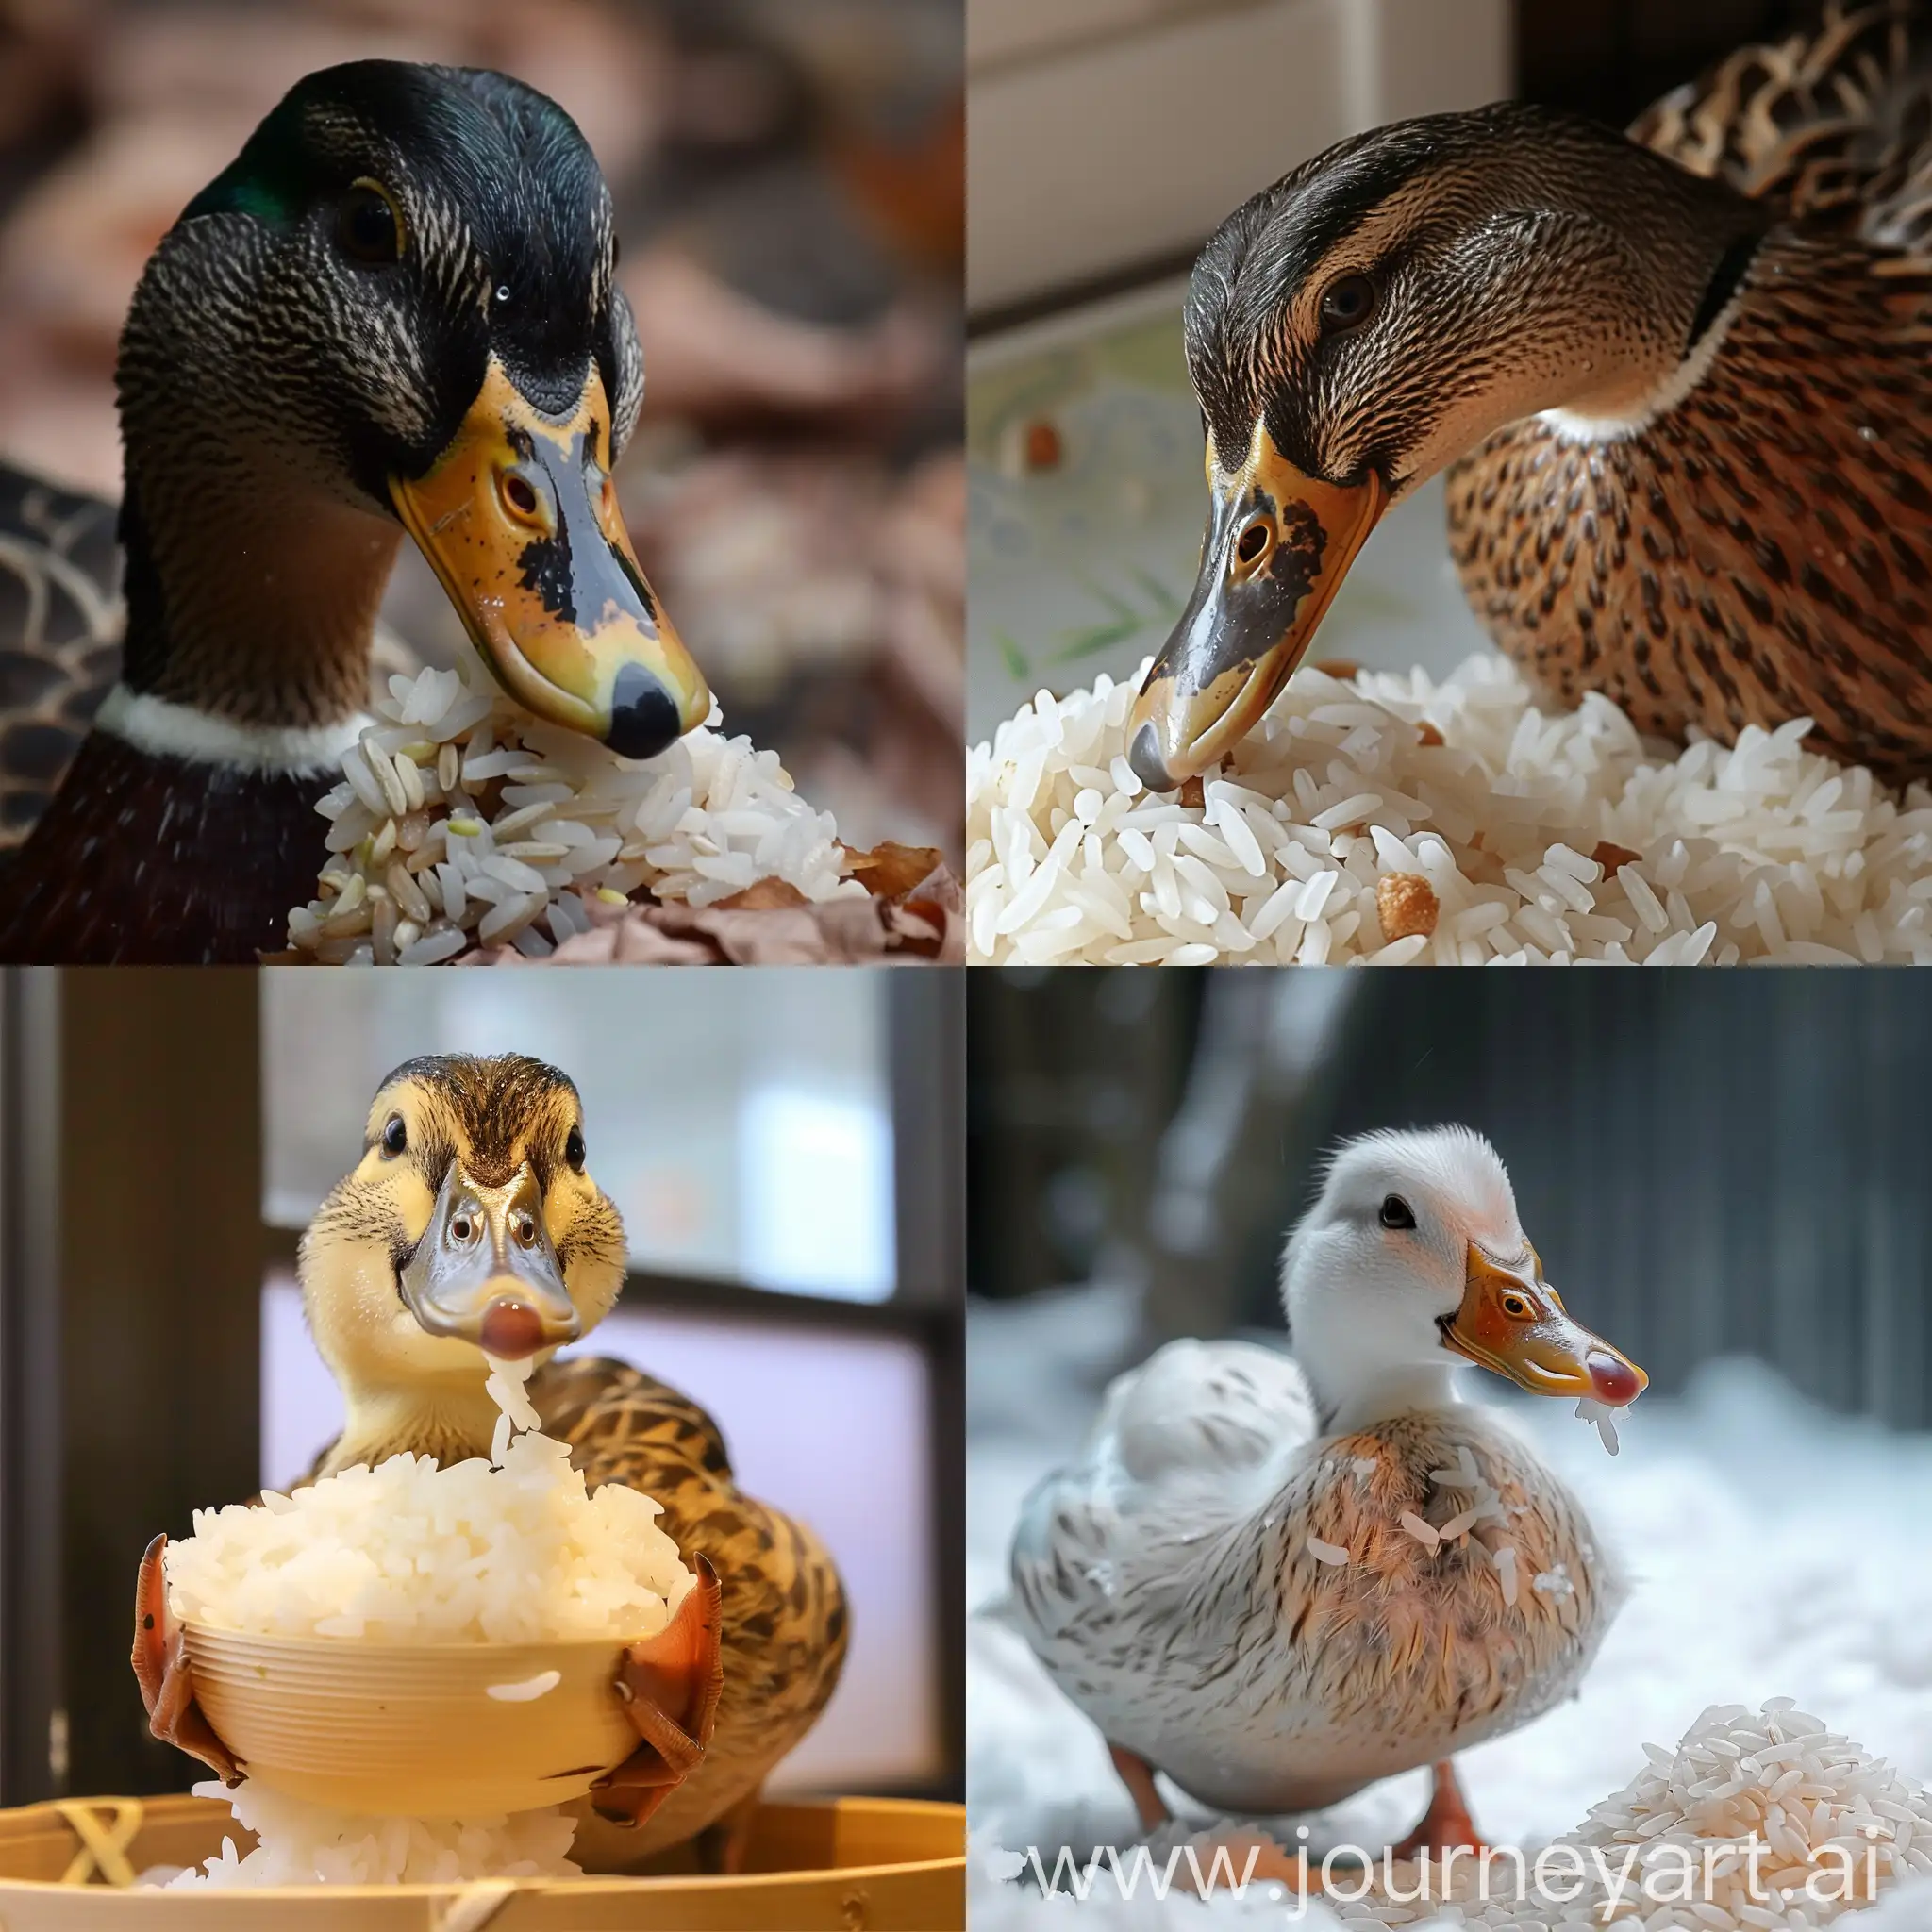 Duck-Eating-Rice-Quaint-Waterfowl-Enjoying-a-Nutritious-Meal